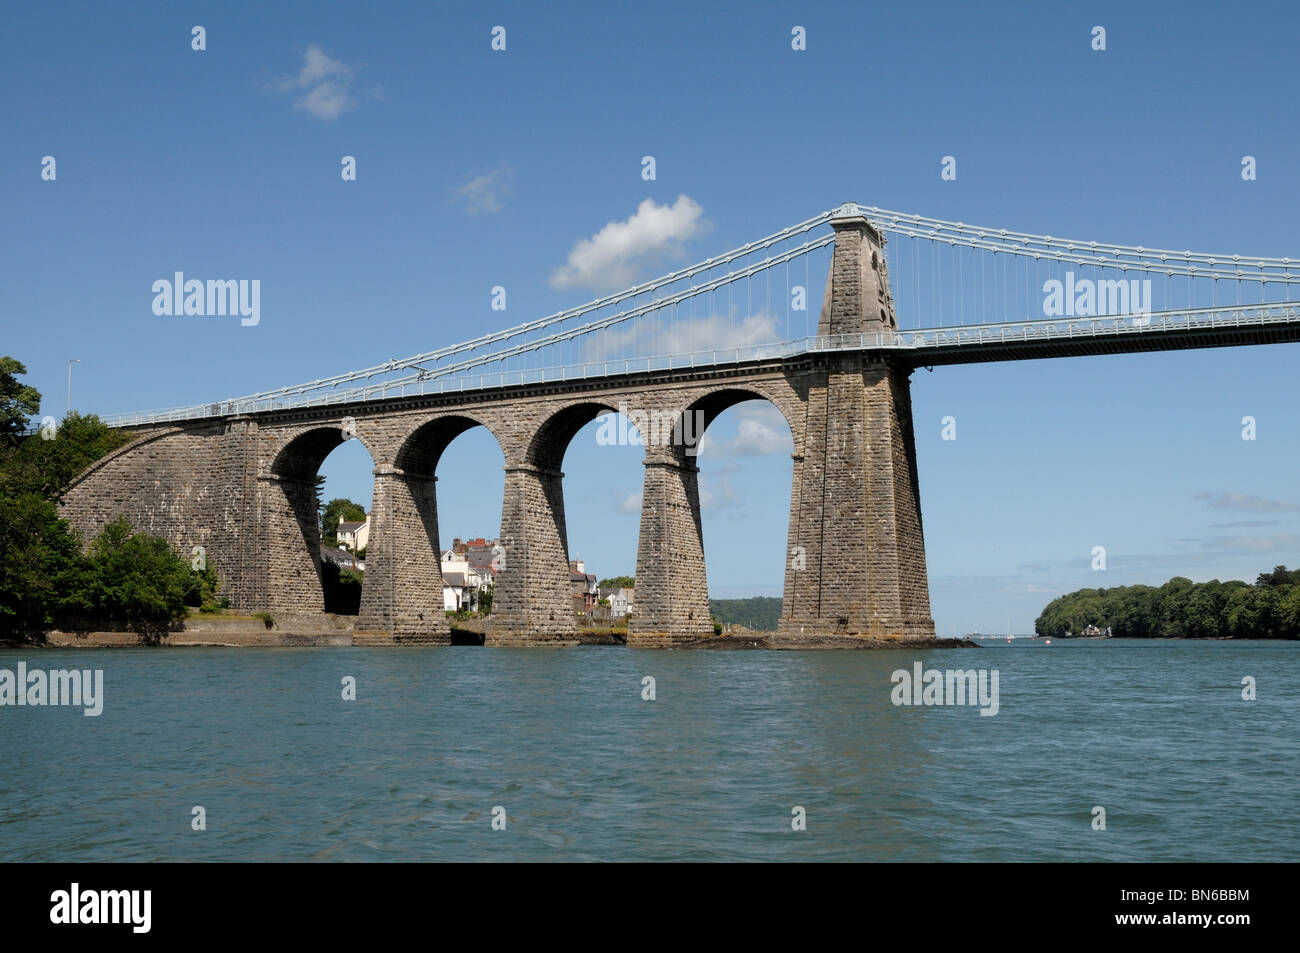 Menai suspension bridge hi-res stock photography and images - Alamy